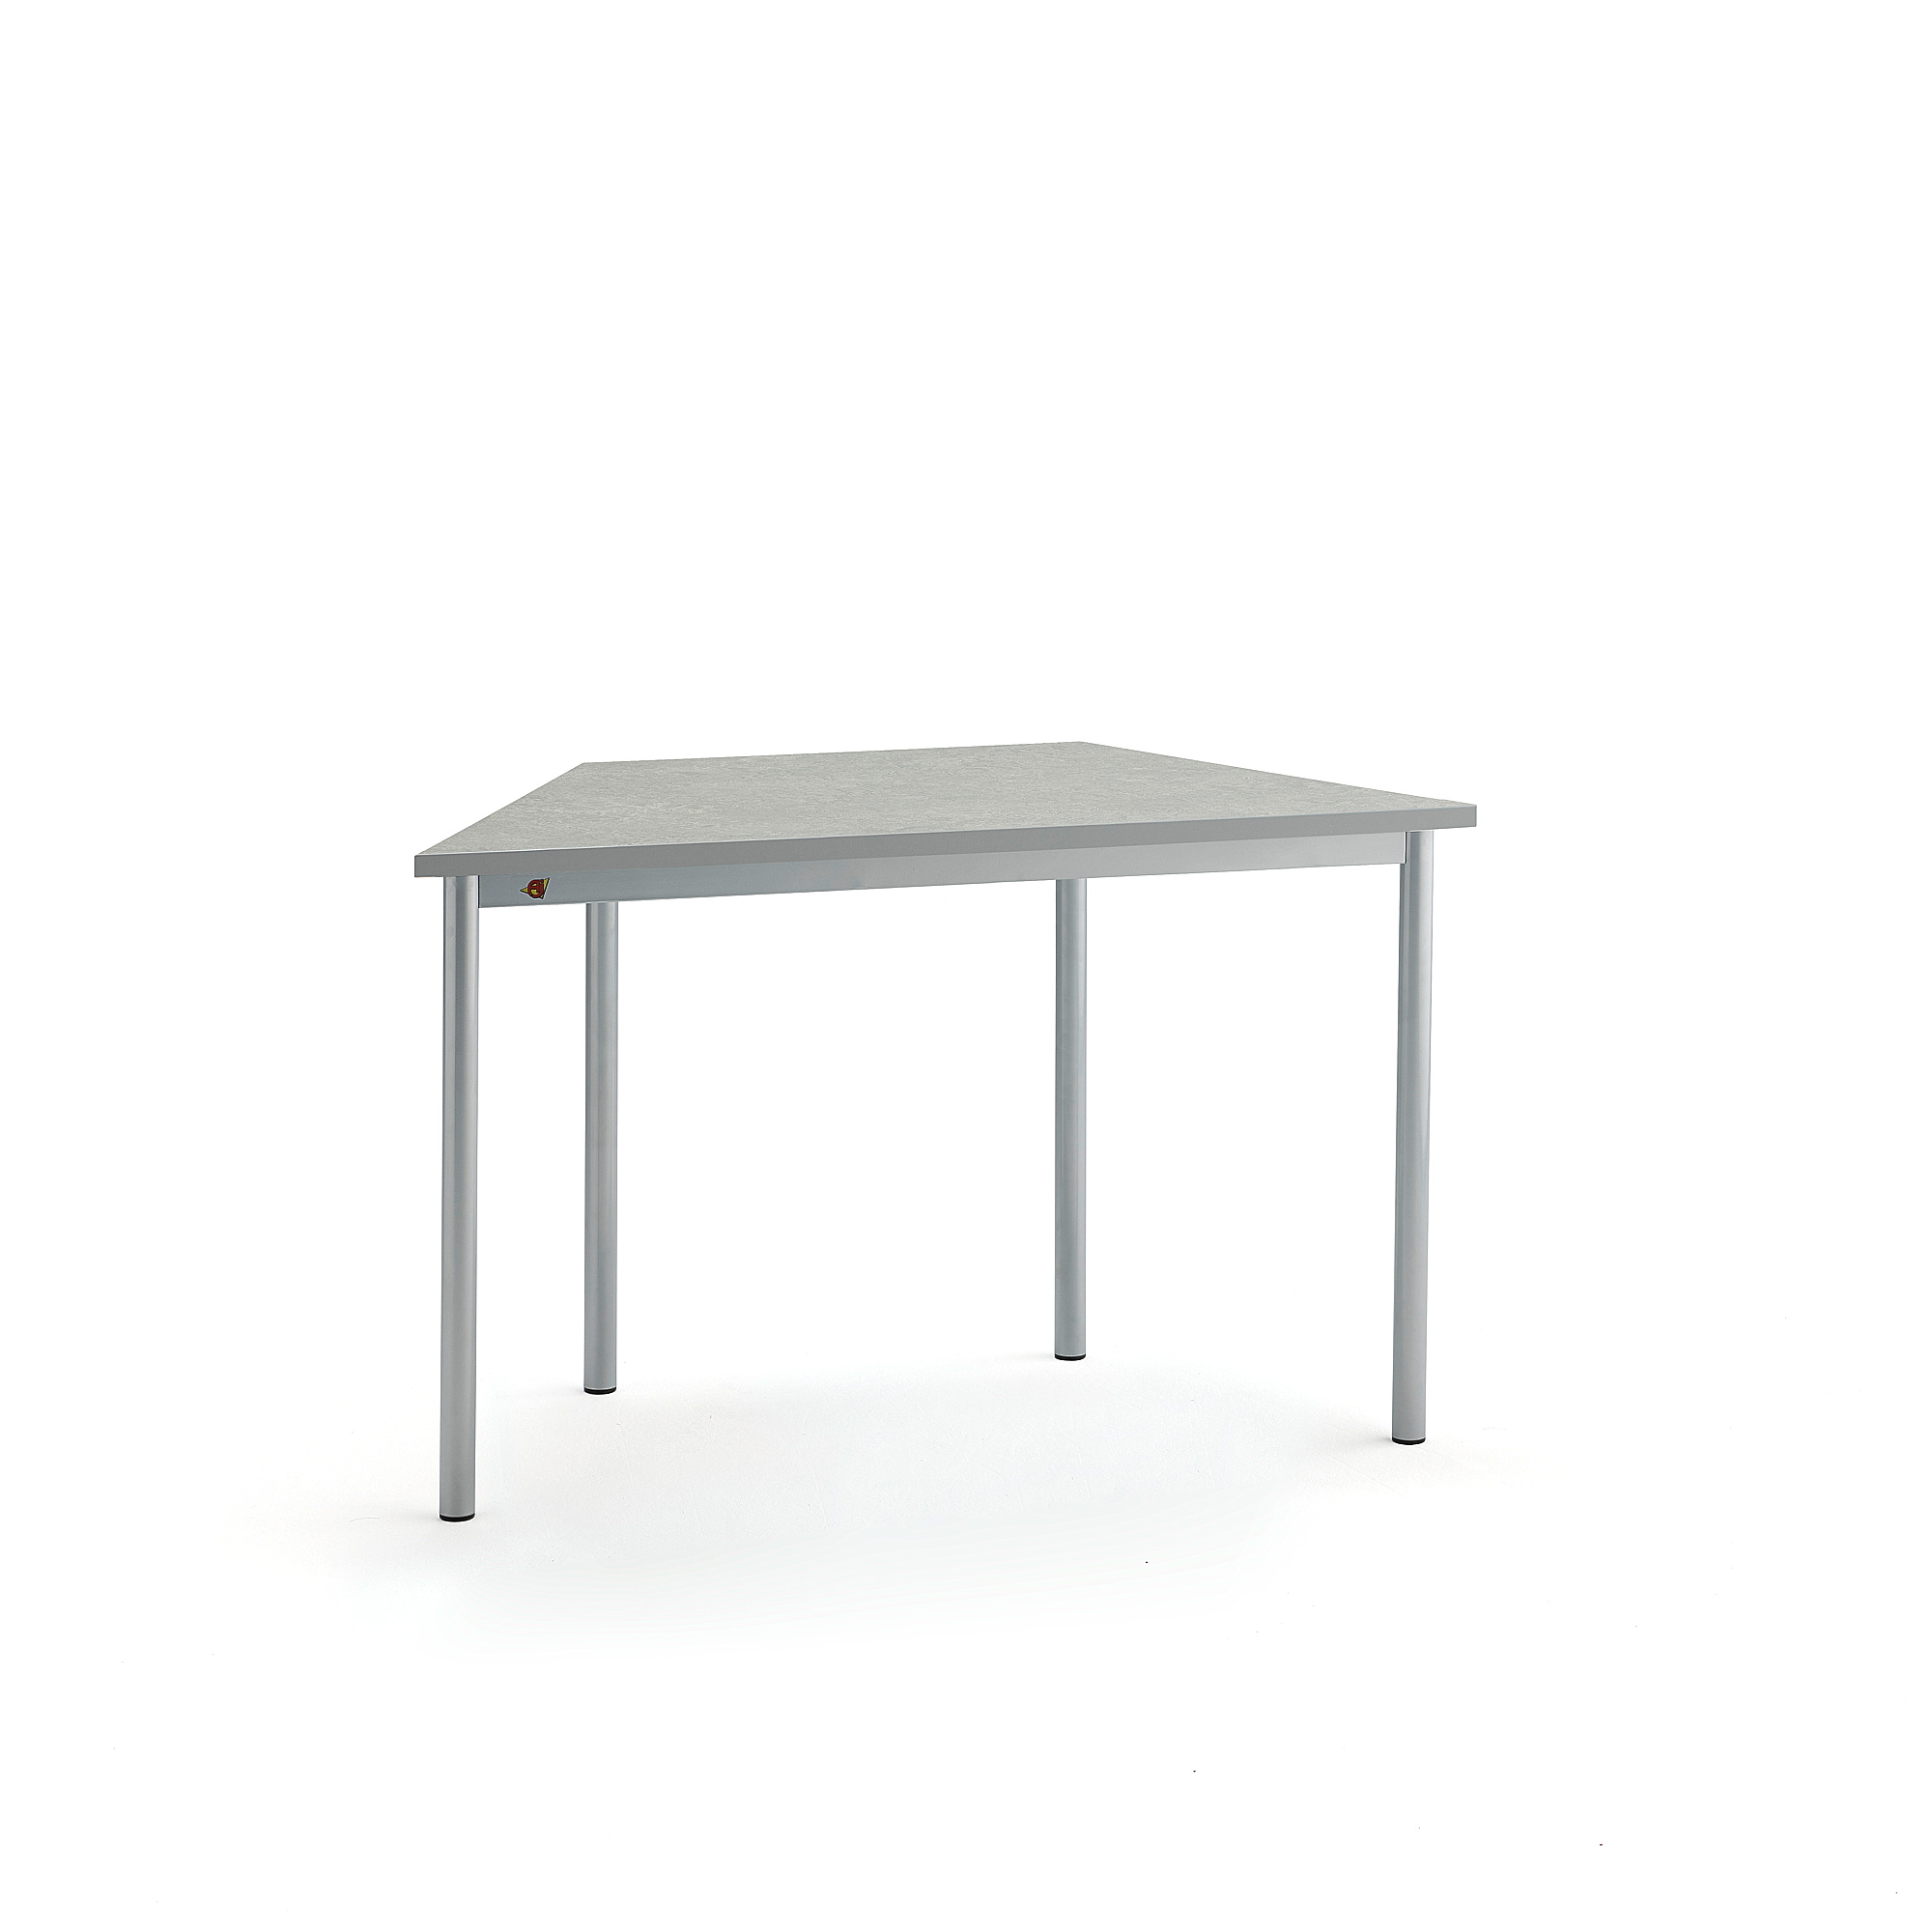 Stůl SONITUS TRAPETS, 1200x600x720 mm, stříbrné nohy, deska s linoleem, šedá